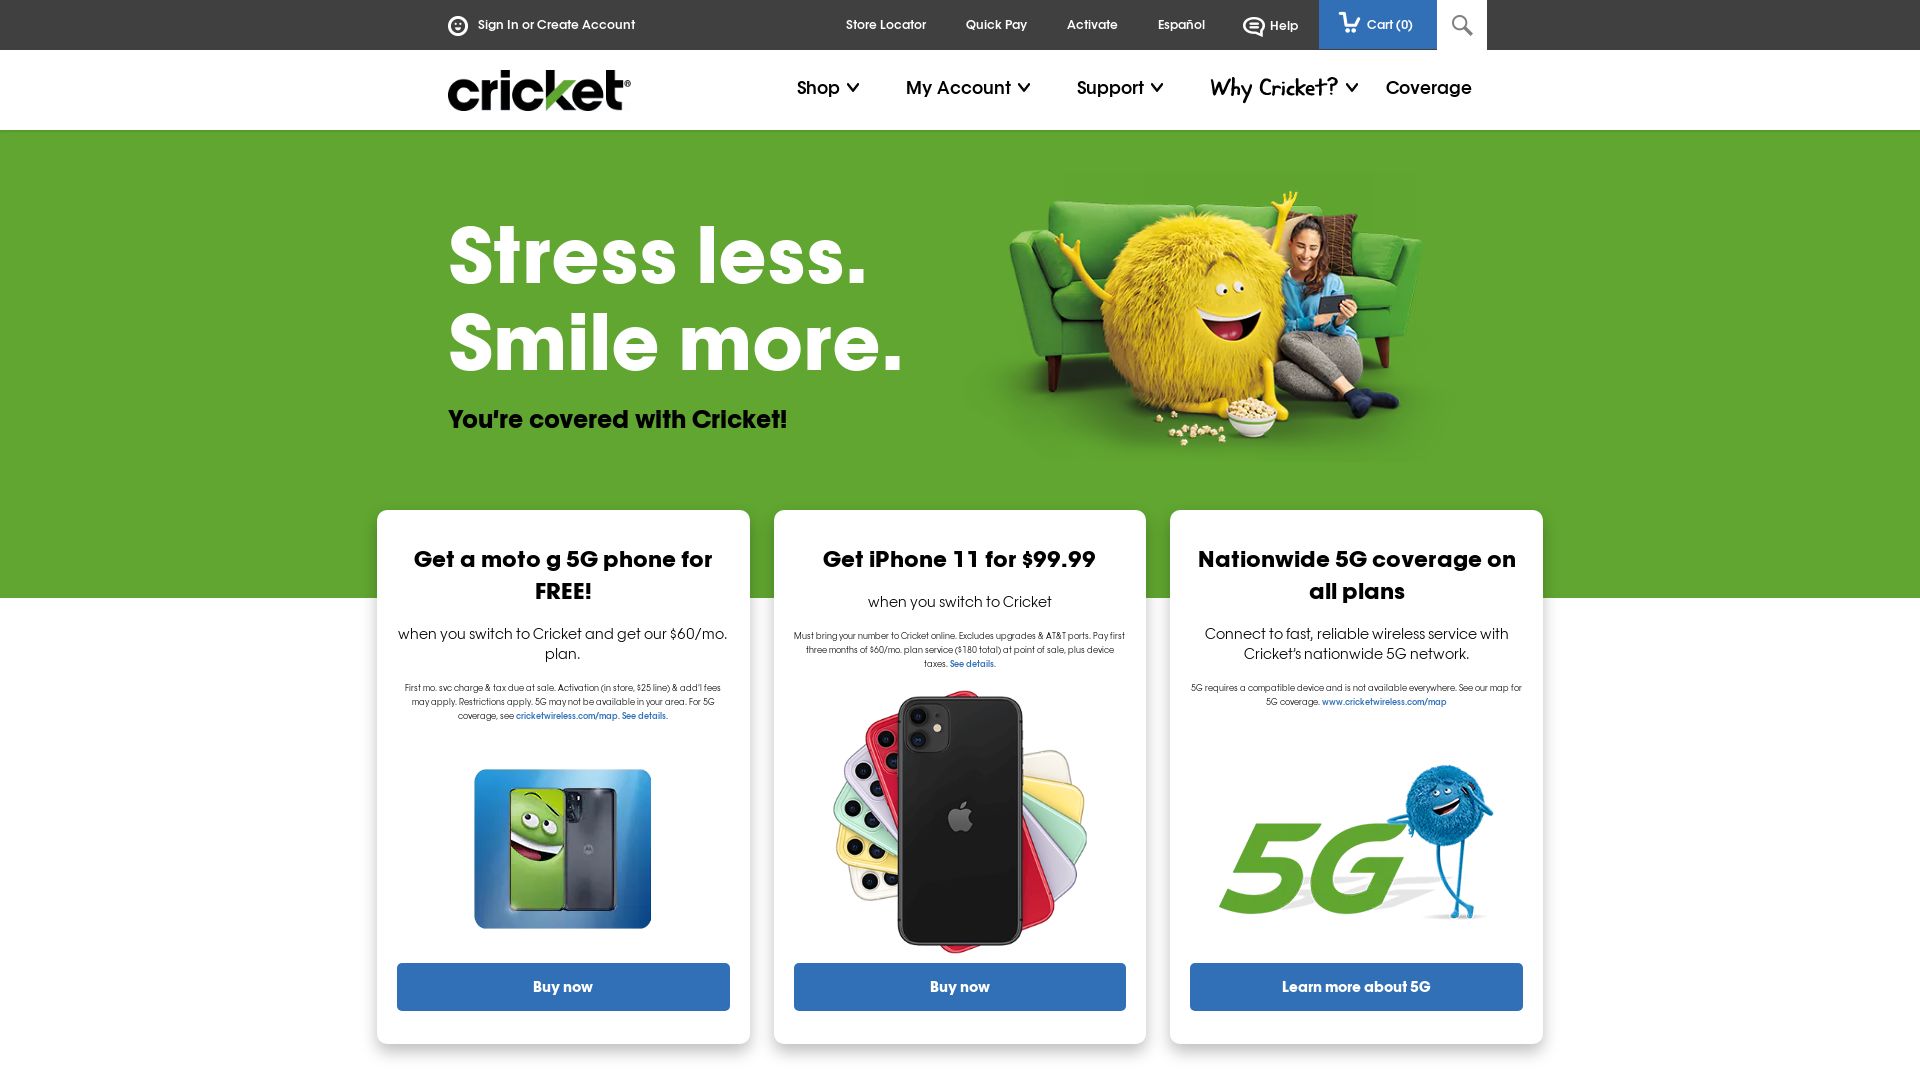 вебсайт cricketwireless.com Є   ONLINE